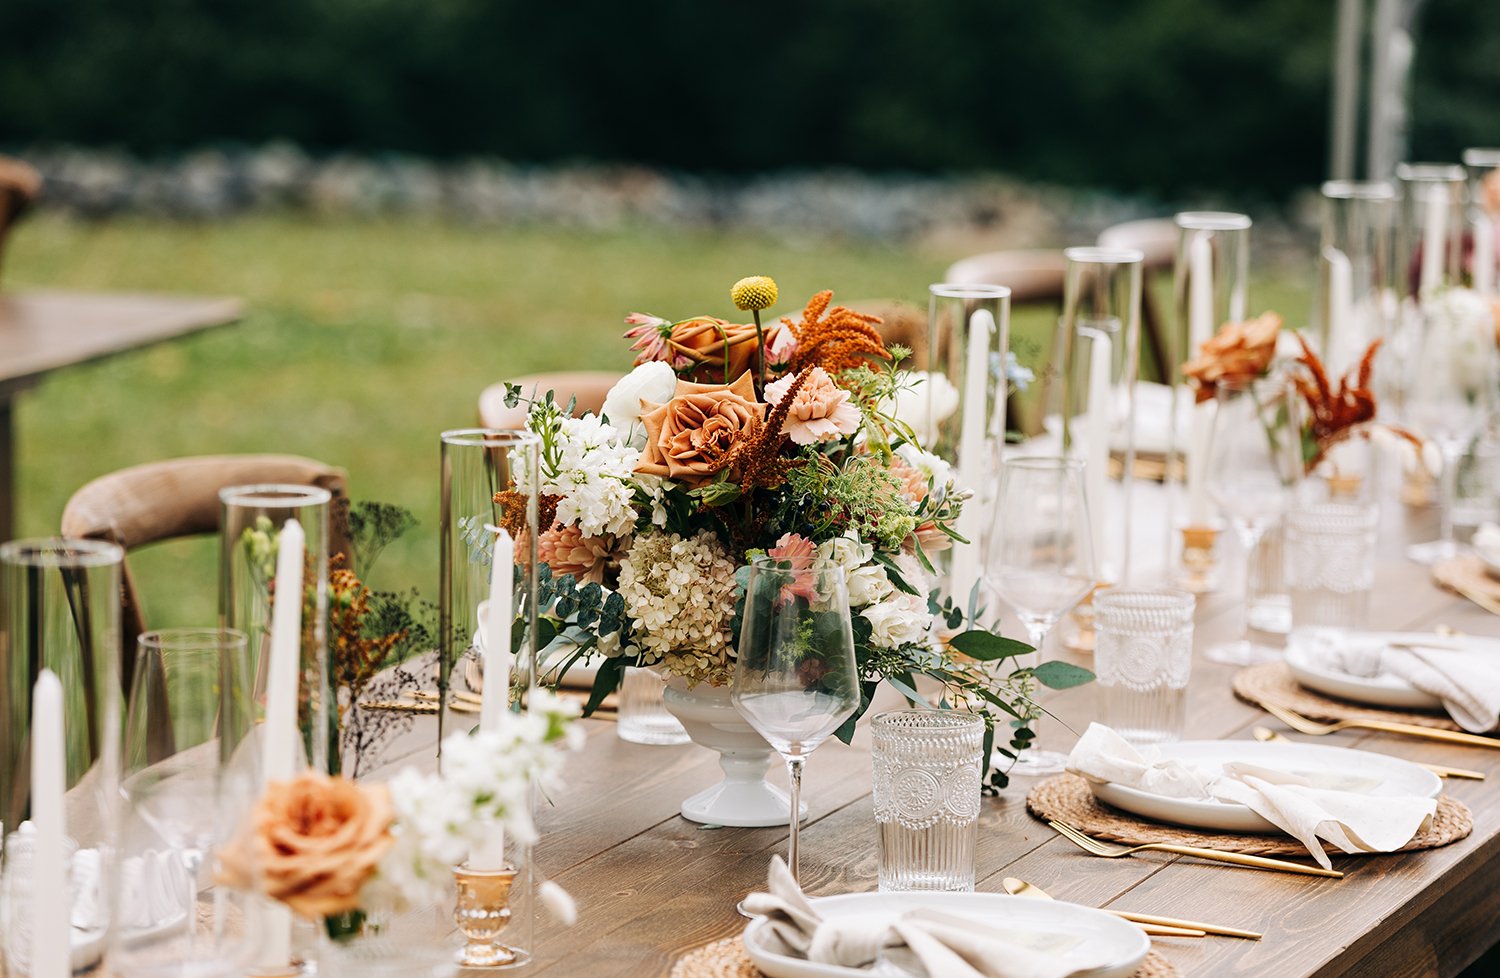  Table settings at a backyard wedding in western massachusetts 